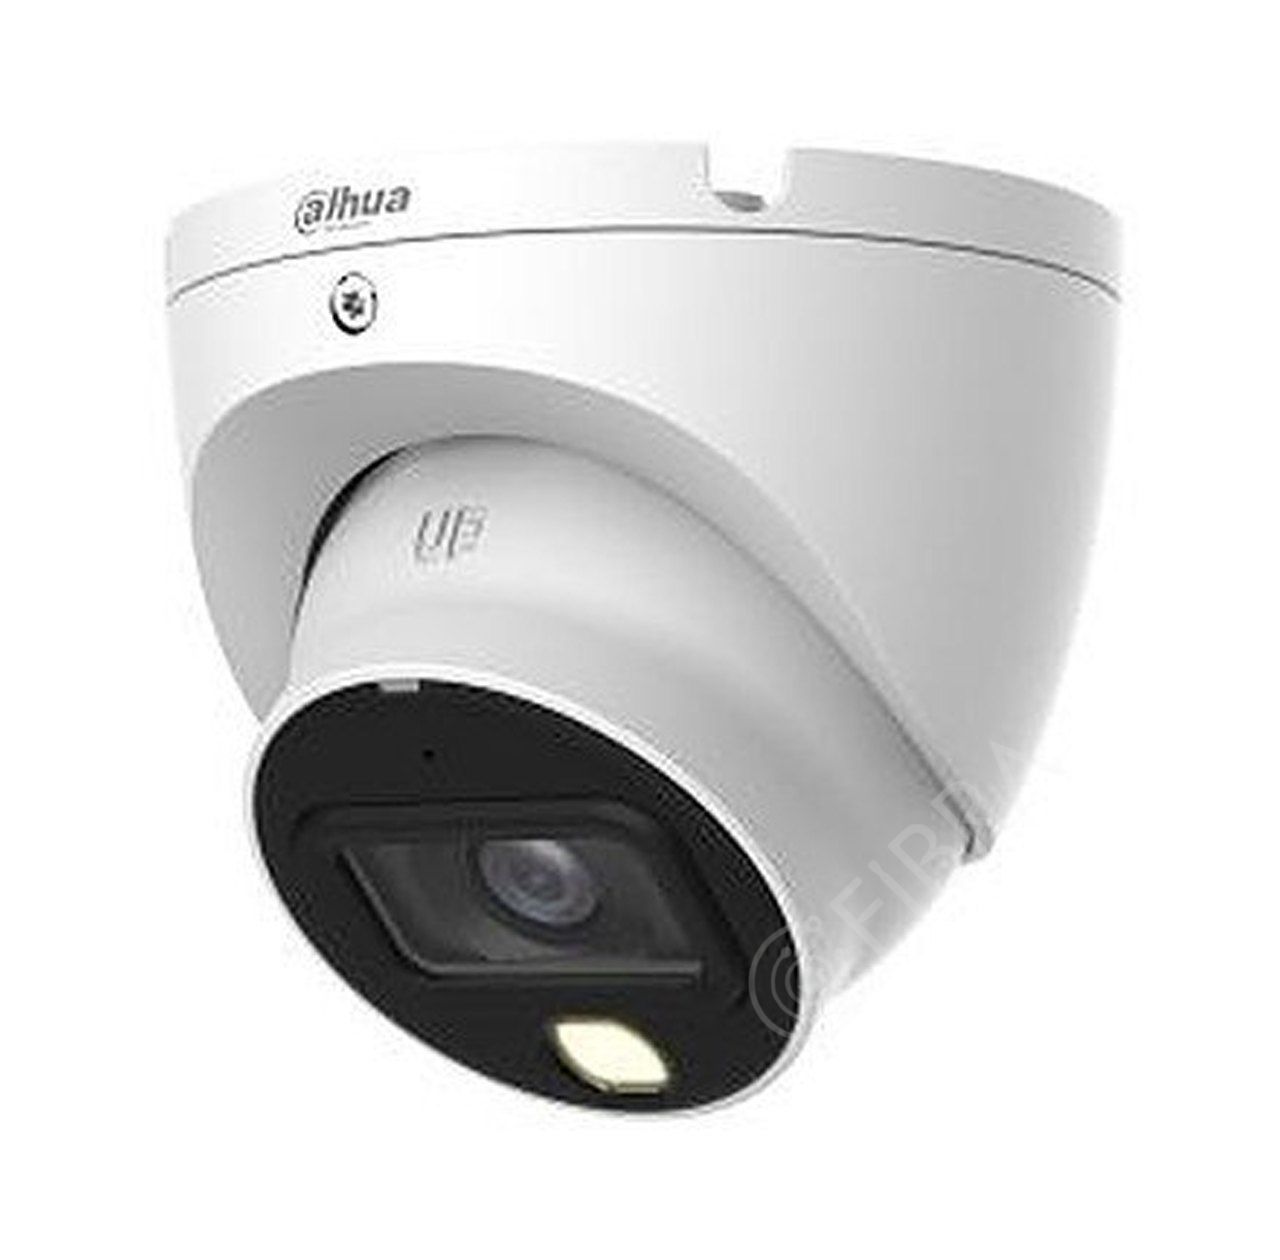 HAC-HDW1209TLQ-LED 2 MP Full Color Dome Kamera(20m Tamamlayıcı ışık)